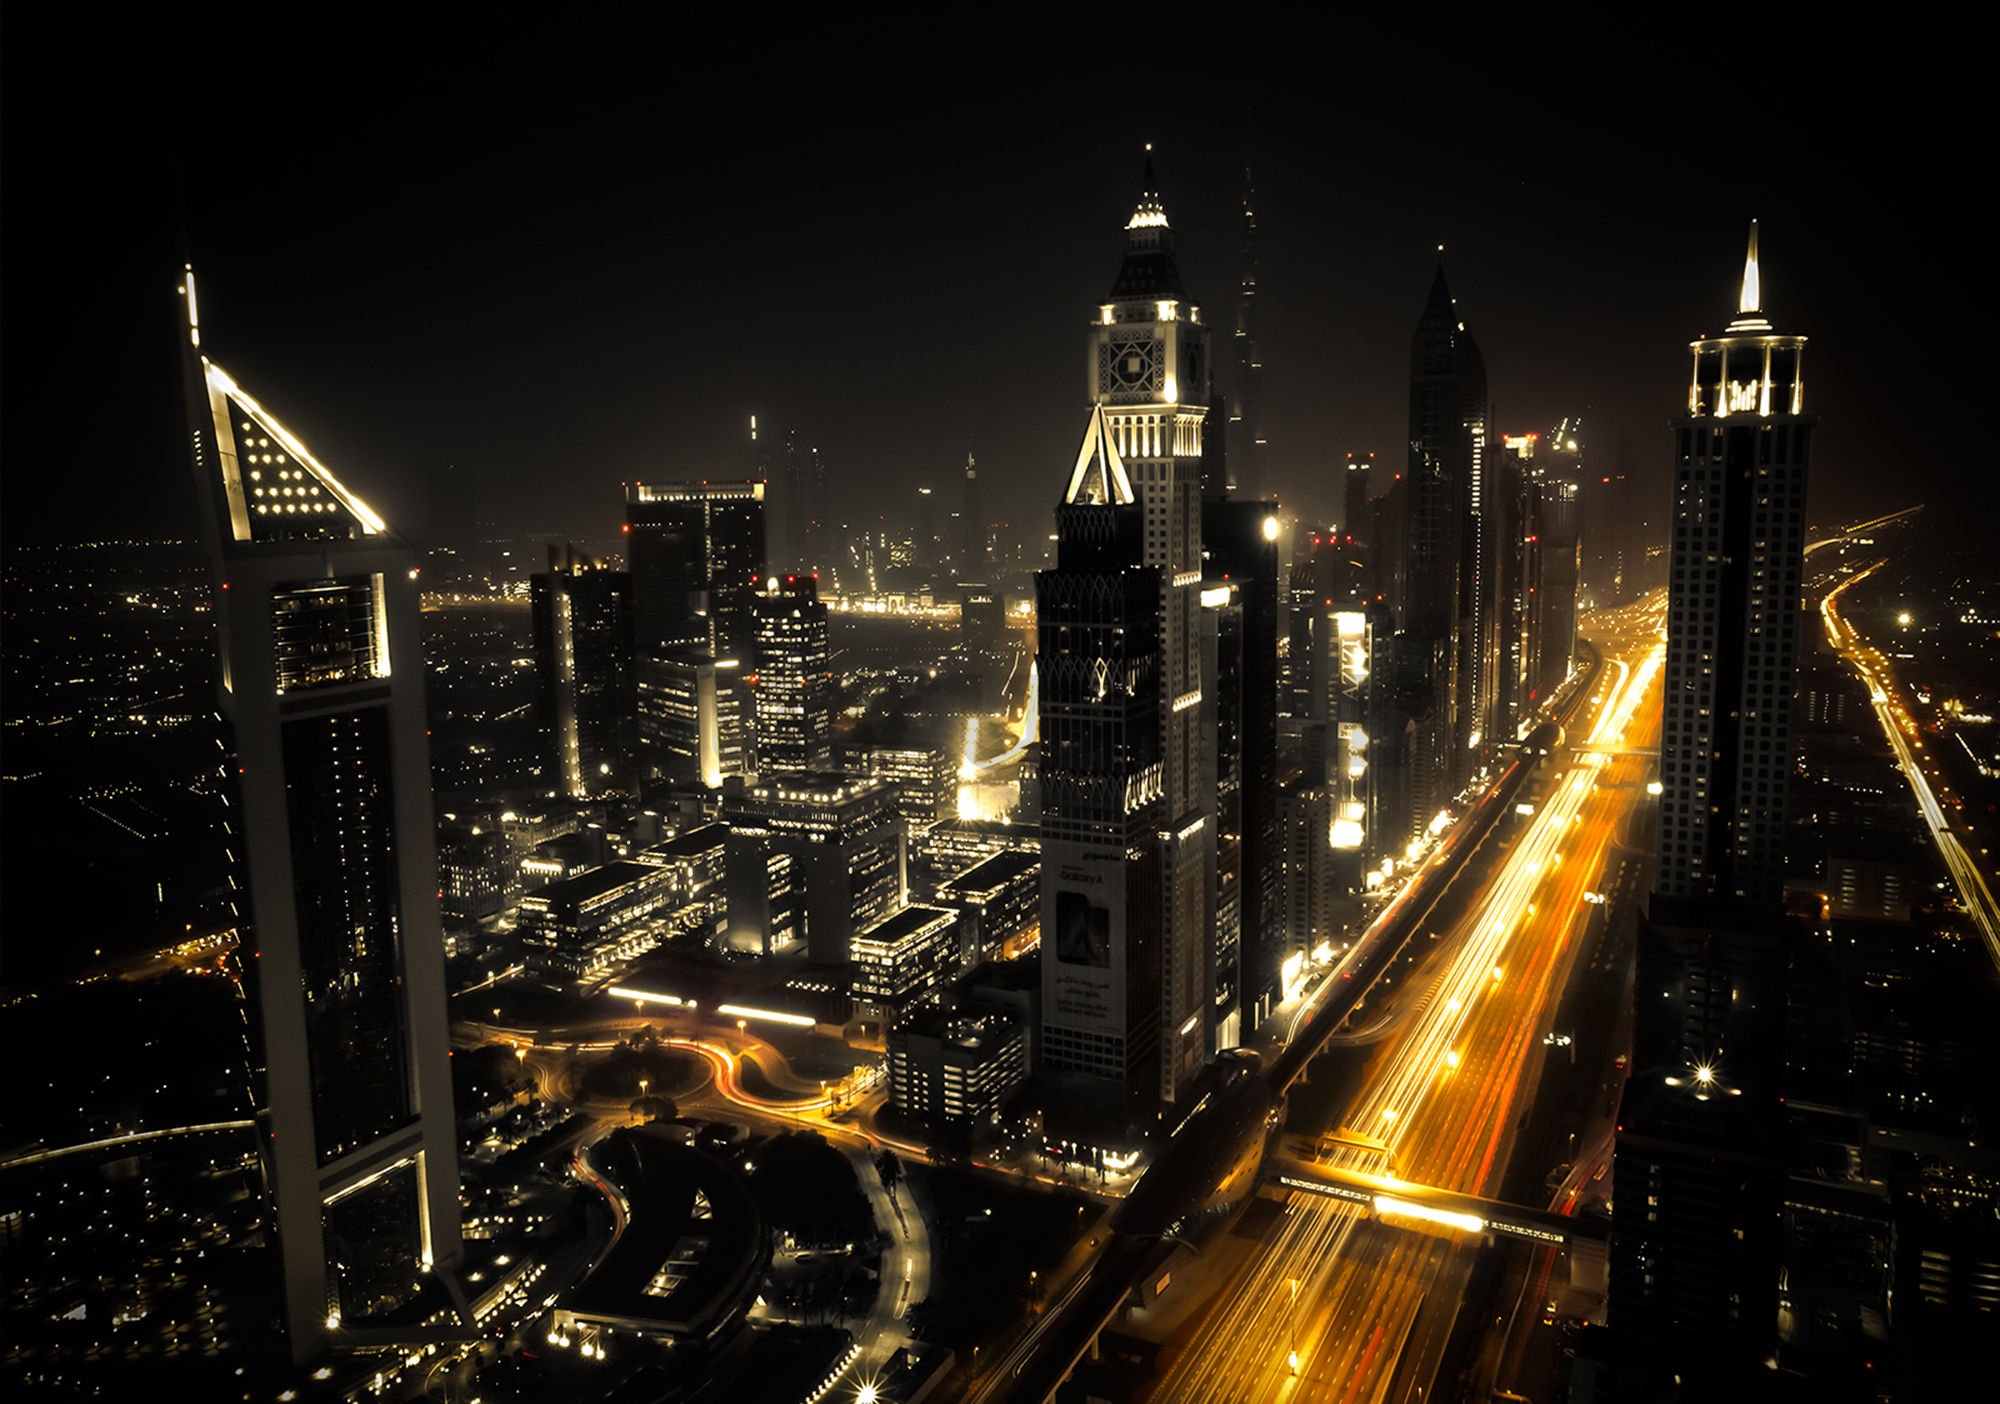 Foto tapeta: Dubai noću (1) - 184x254 cm